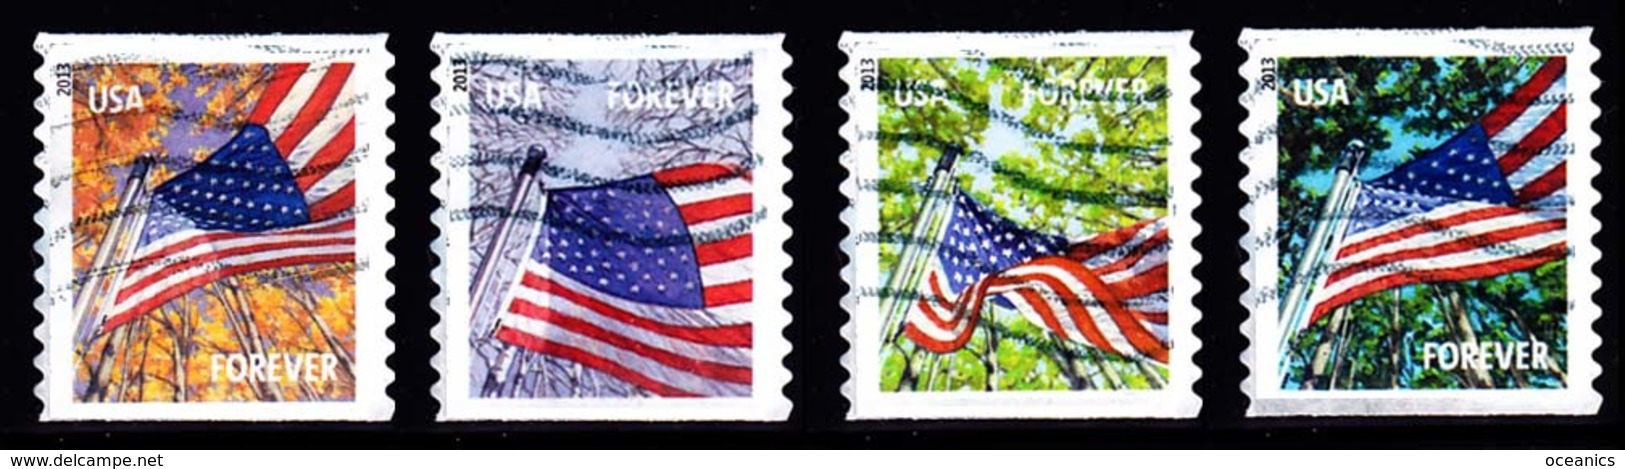 Etats-Unis / United States (Scott No.4774-77 - Flag) (o) - Gebraucht